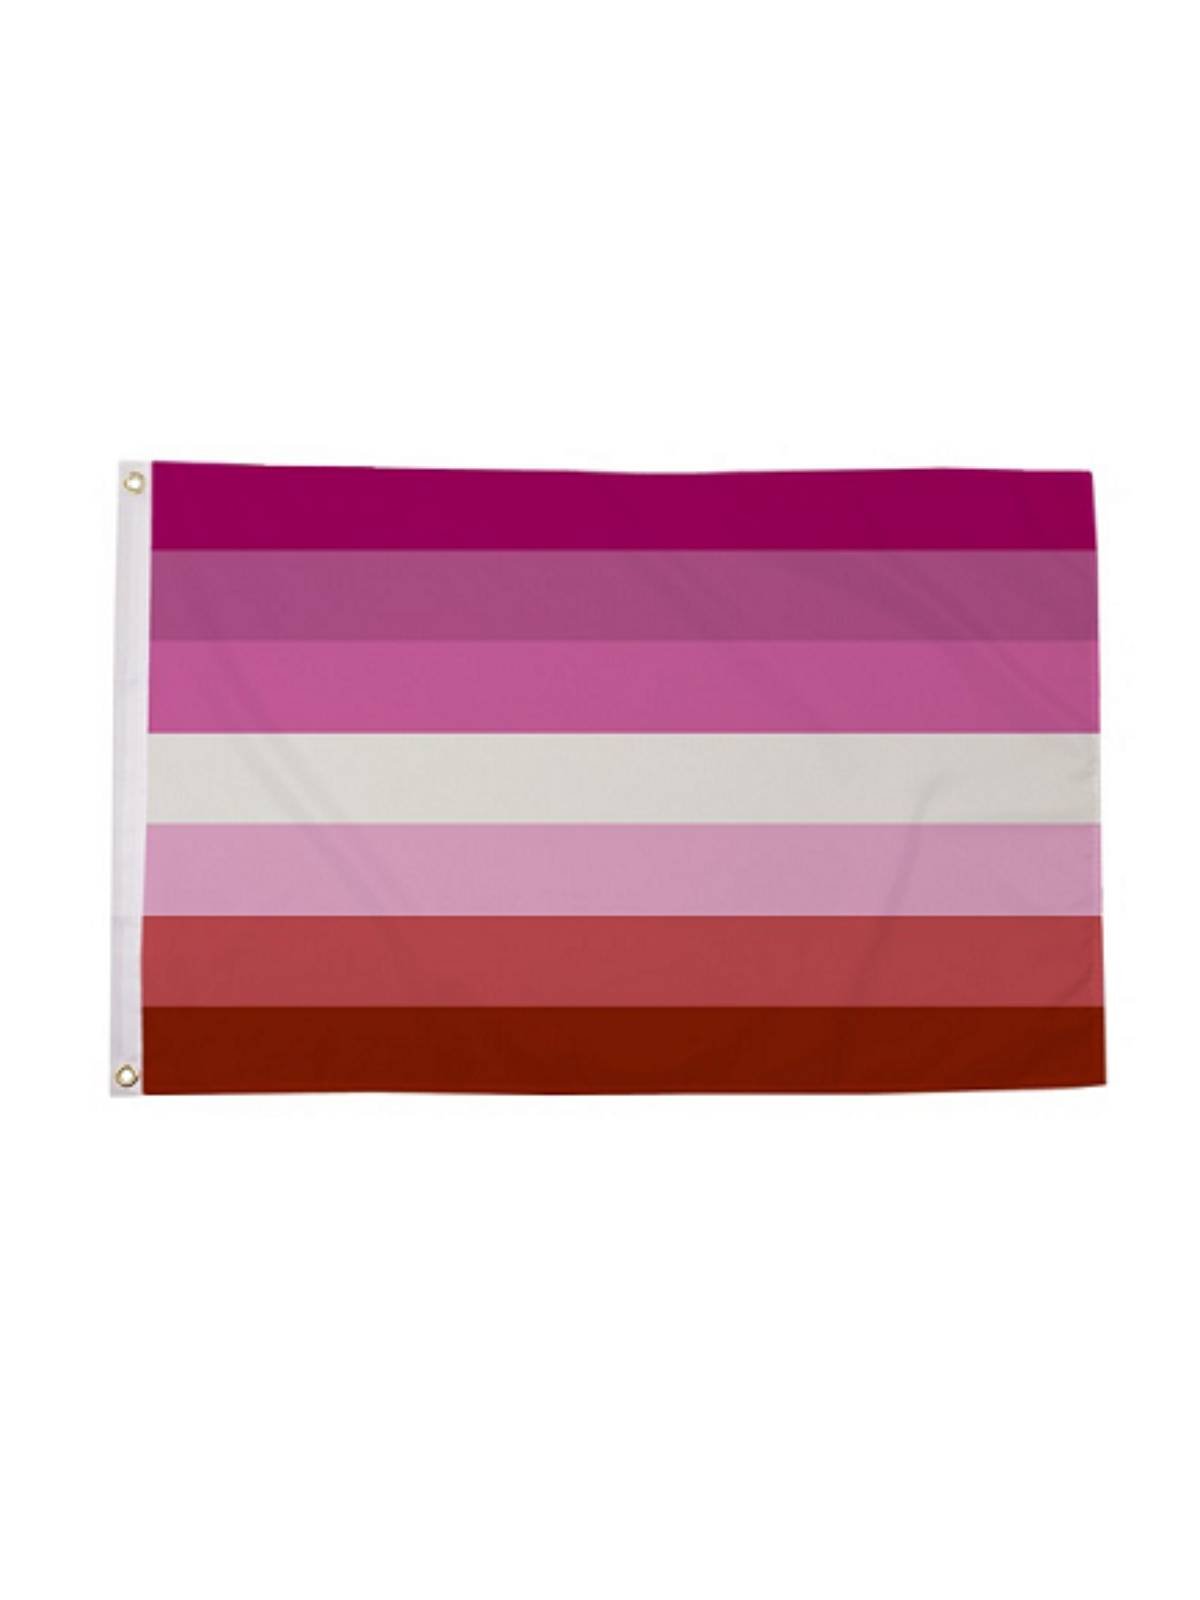 Regenbogen Flagge Lesbian Community 90 x 150 cm